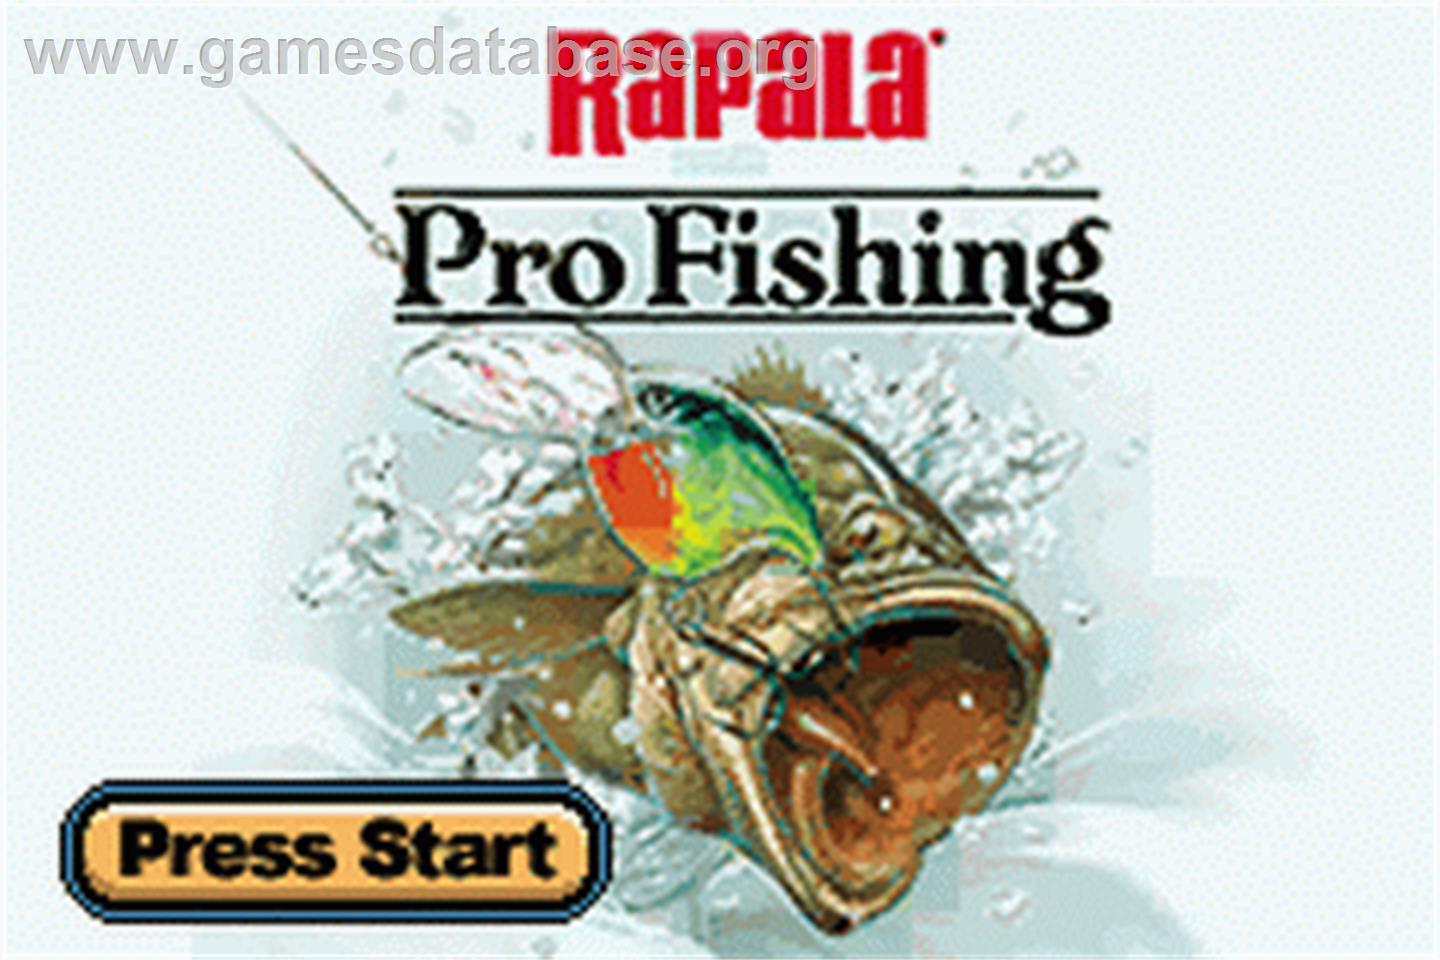 Rapala Pro Fishing - Nintendo Game Boy Advance - Artwork - Title Screen